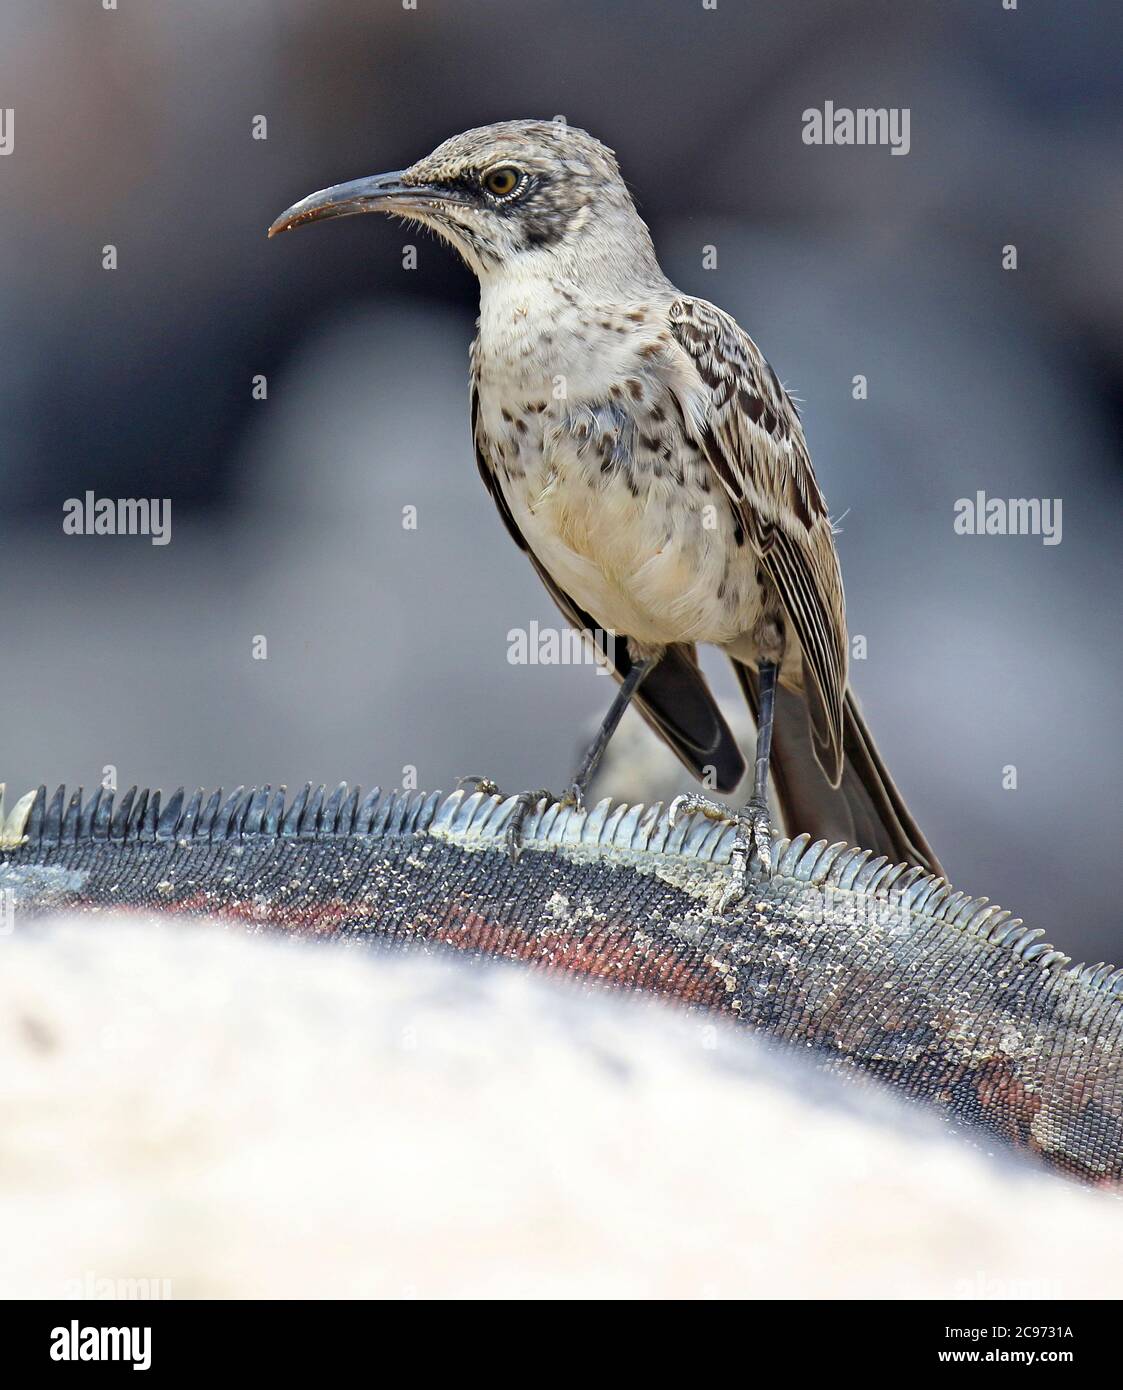 Hood mockingbird, Espanola mockingbird (Nesomimus parvulus macdonaldi, Nesomimus macdonaldi), foraggio sulla spiaggia, Ecuador, Isole Galapagos, Espanola Foto Stock